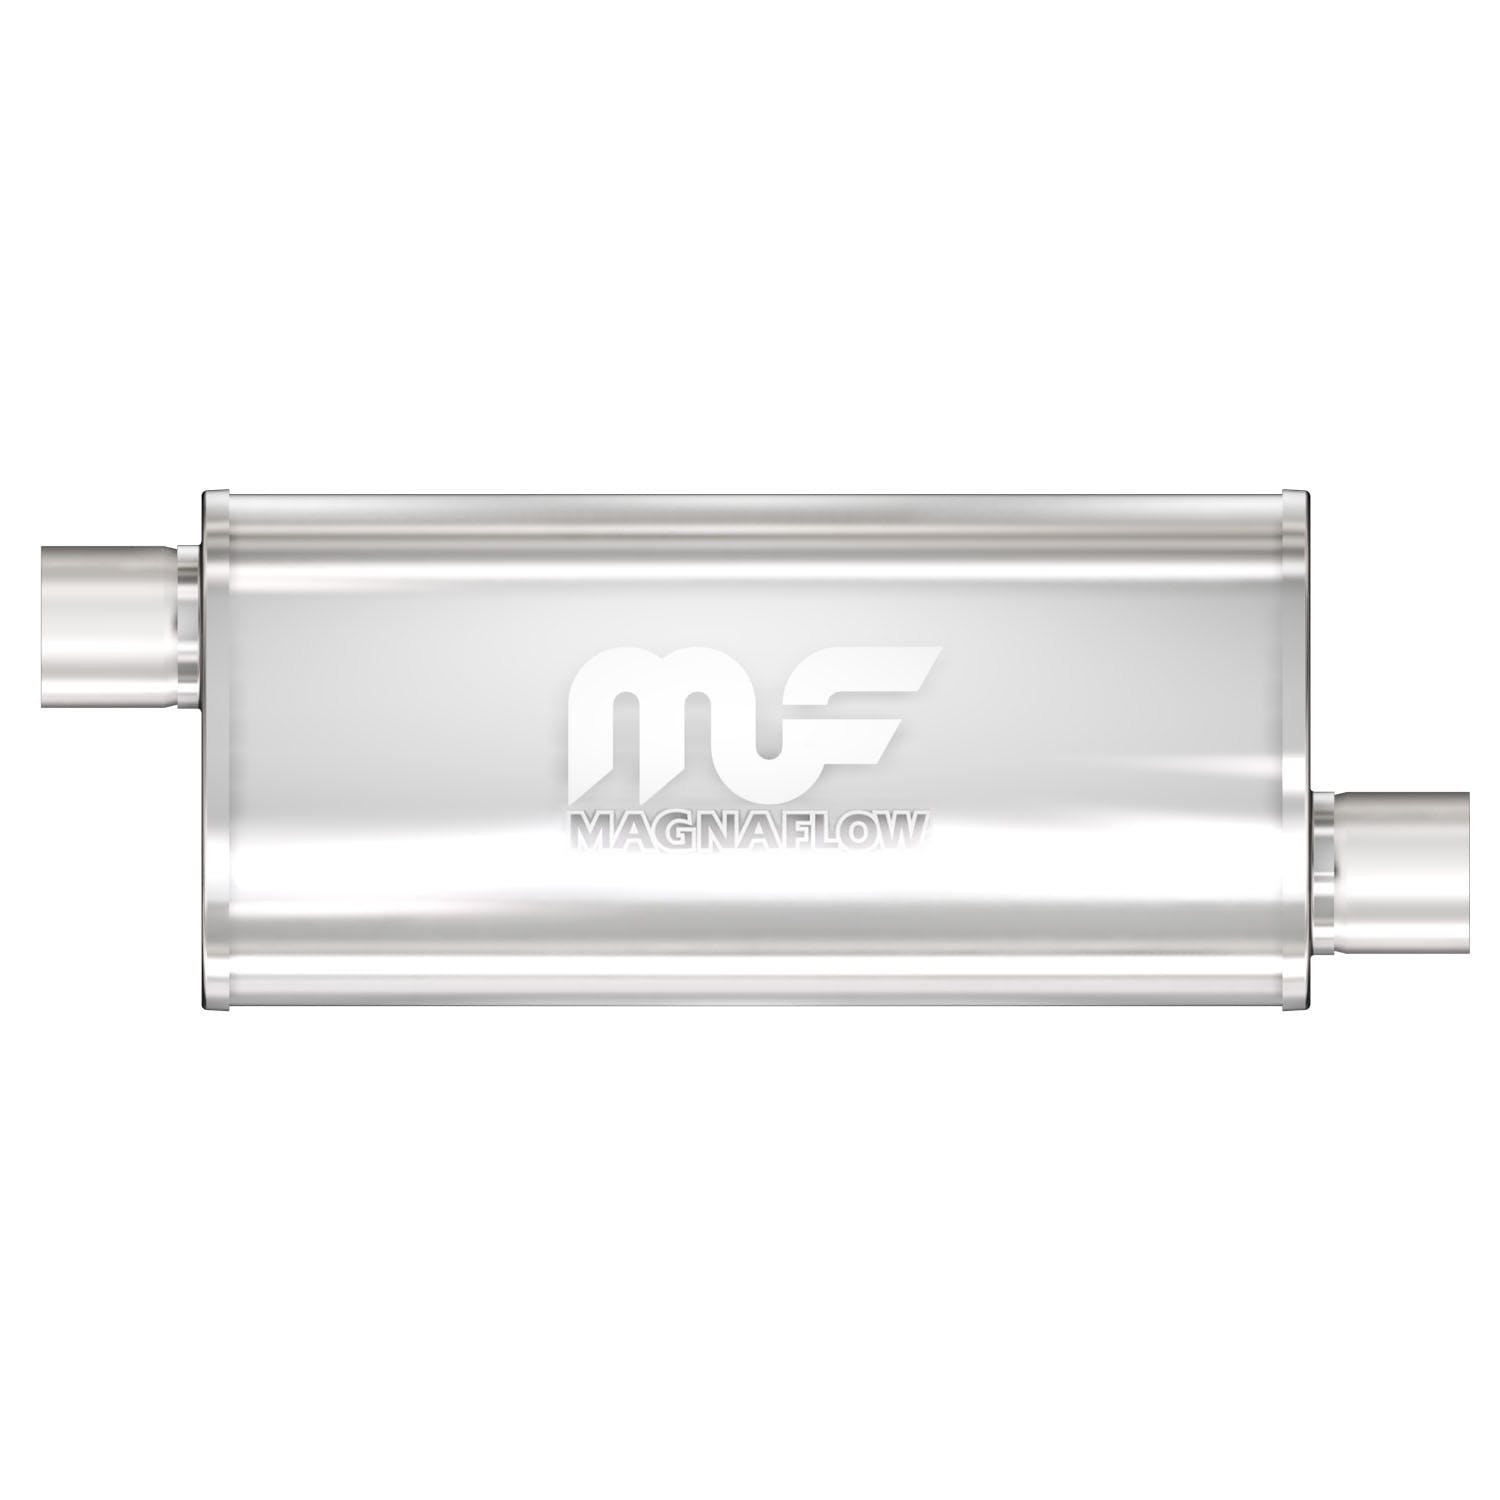 MagnaFlow Exhaust Products 14261 Universal Muffler